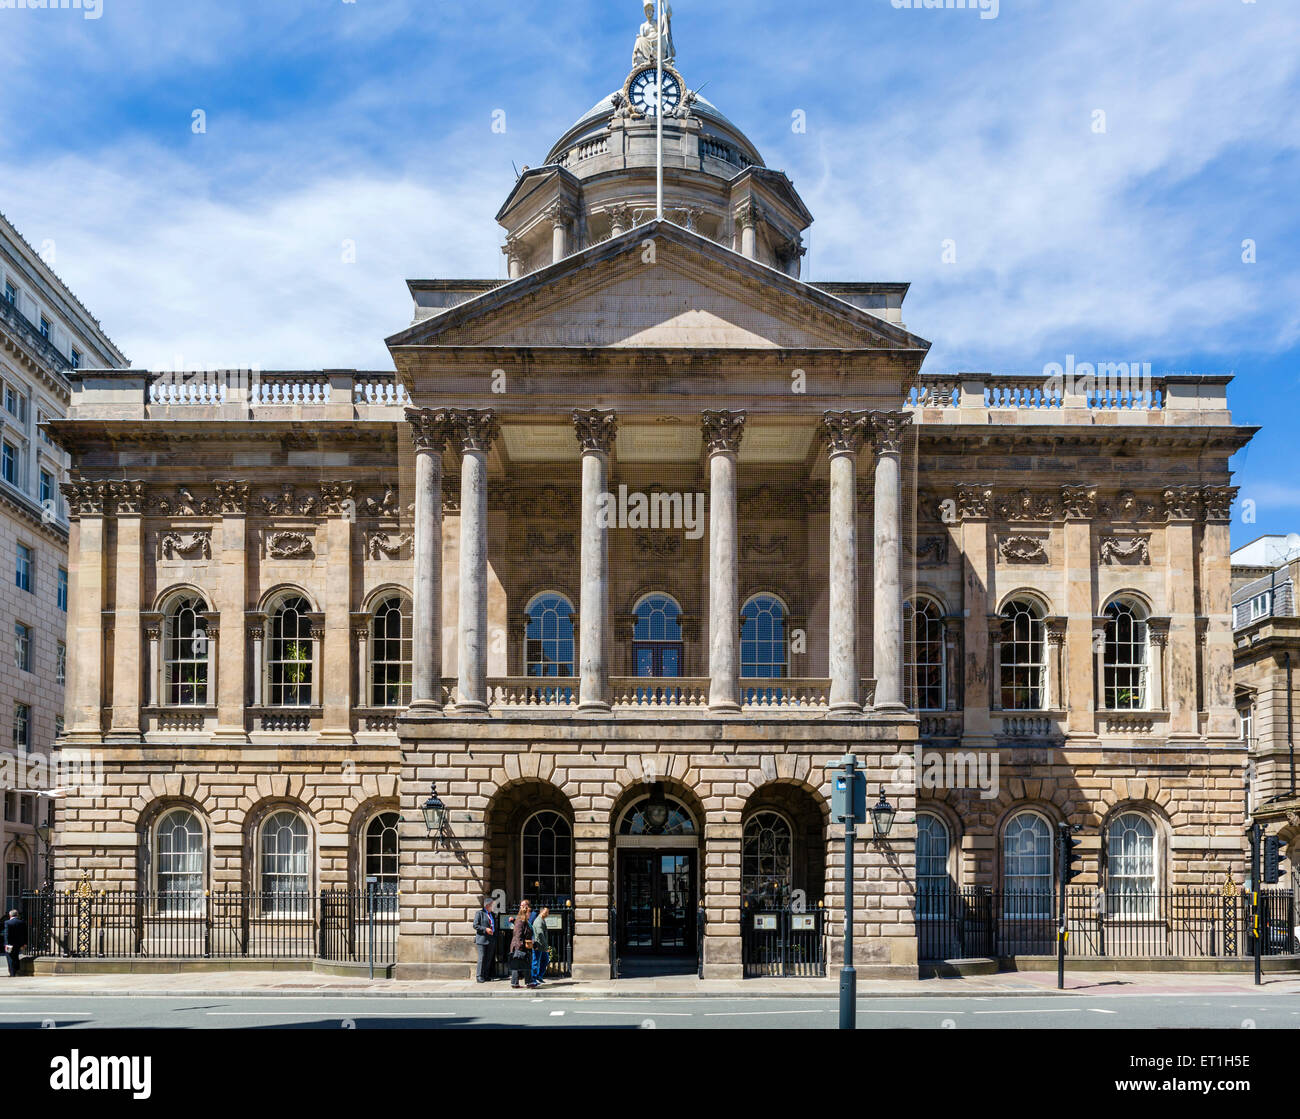 The 18thC Town Hall, High Street, Liverpool, Merseyside, England, UK Stock Photo